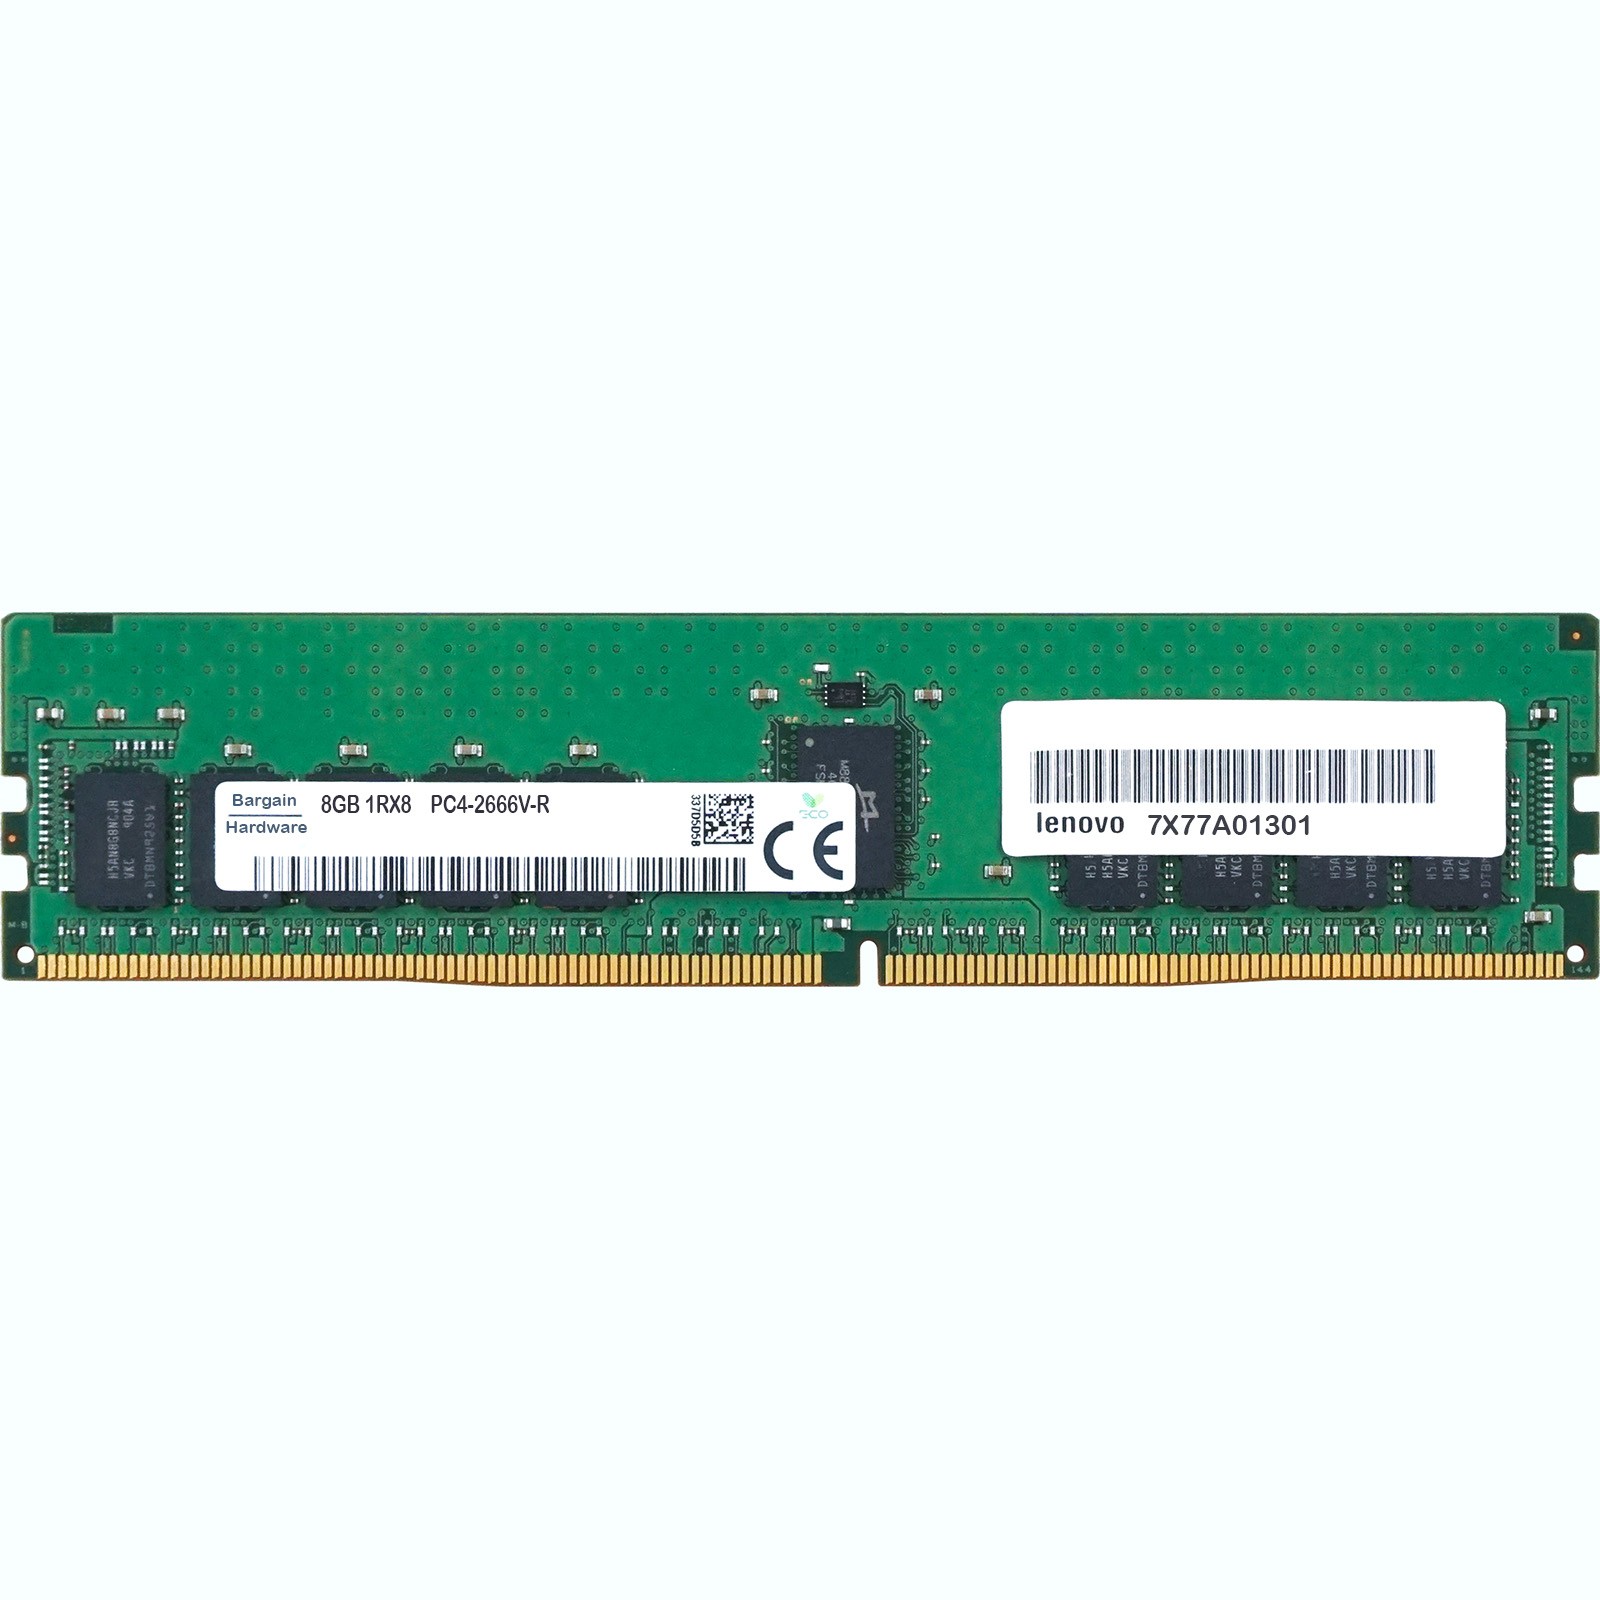 Lenovo (7X77A01301) - 8GB PC4-21300V-R (1RX8, DDR4-2666MHz) RAM